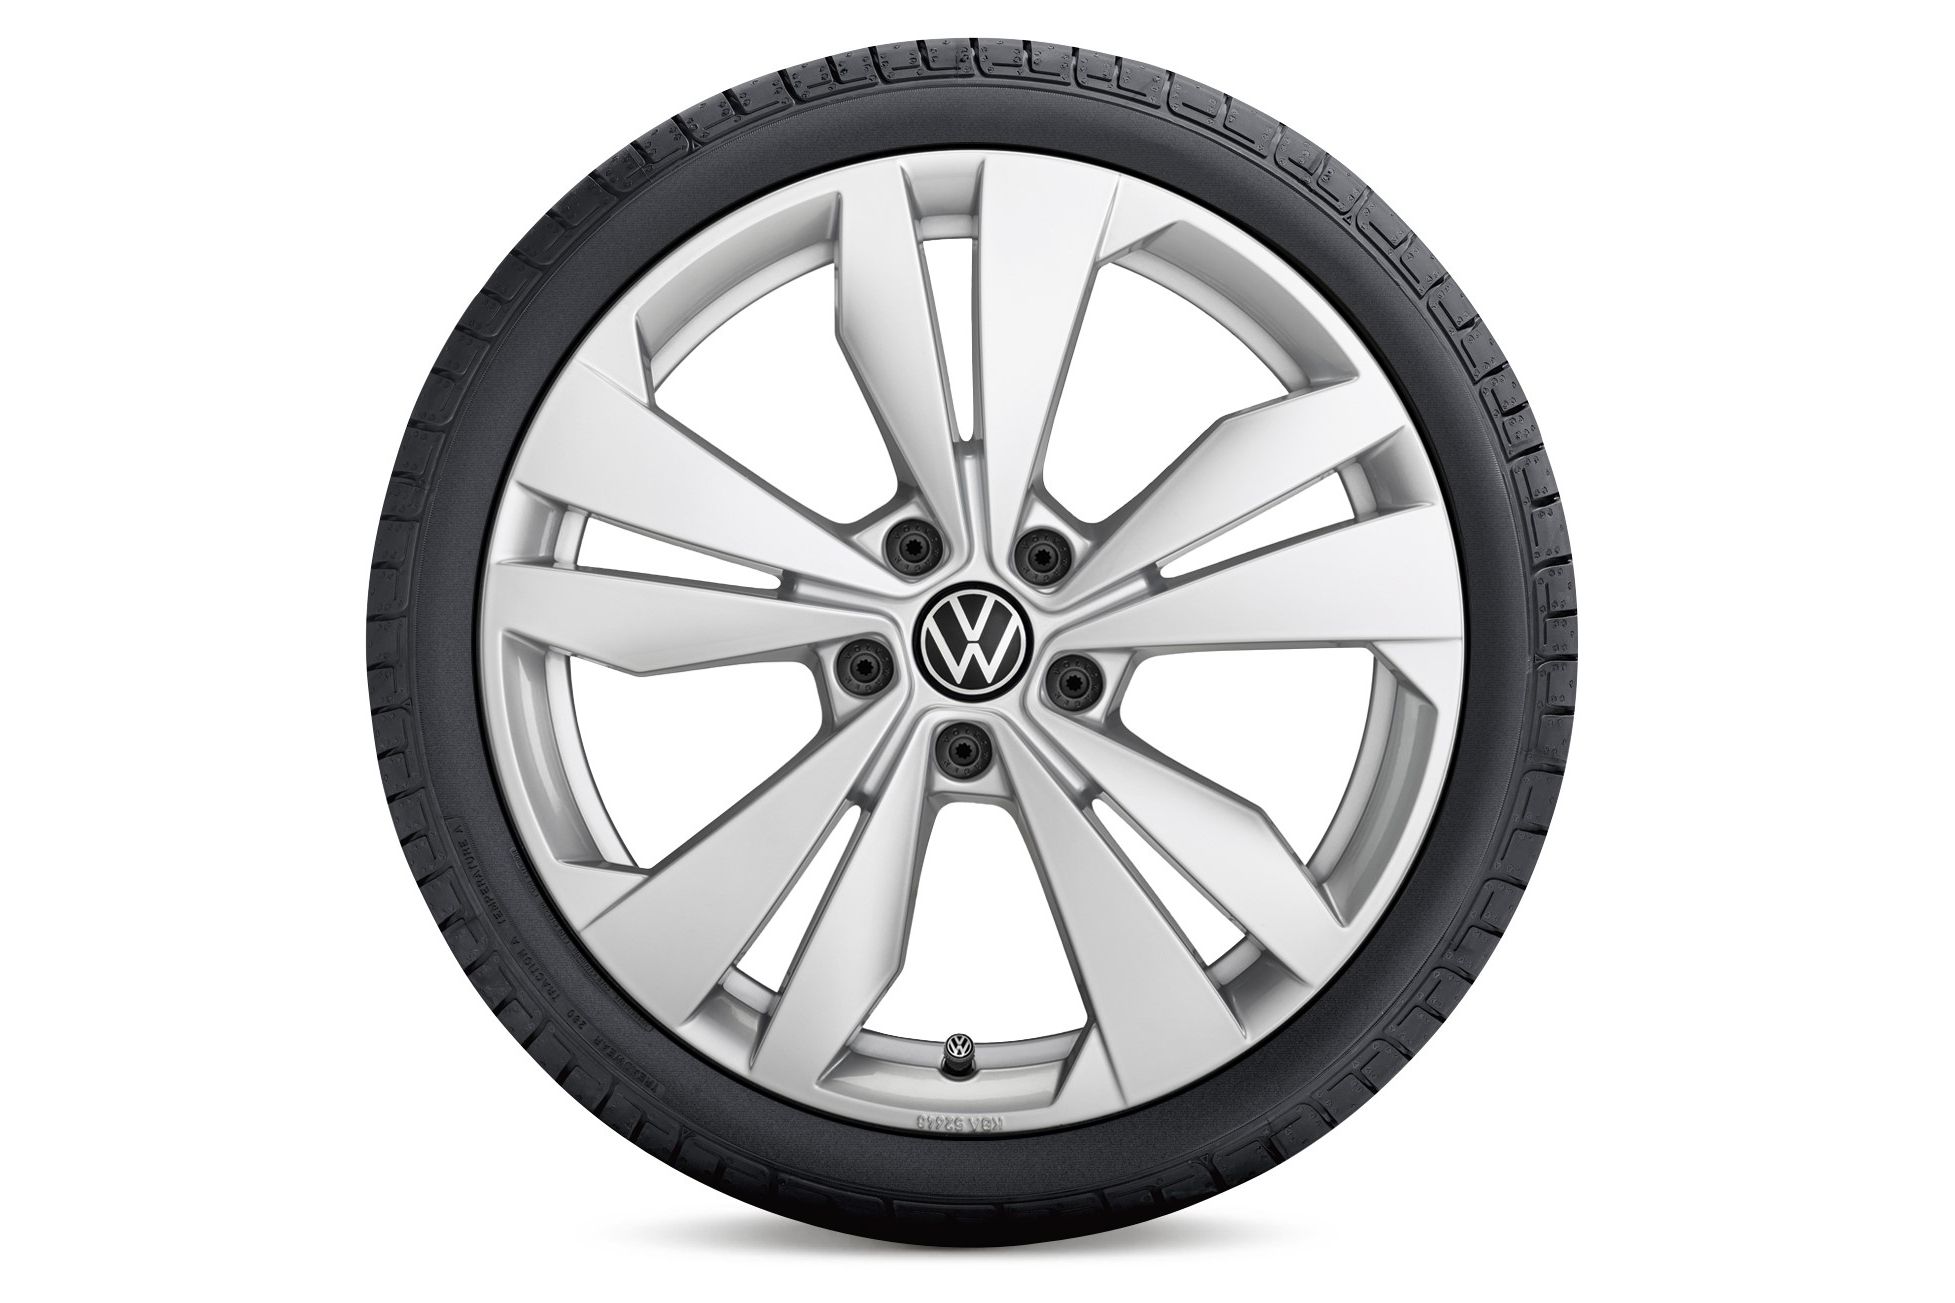 VW Volkswagen Winterkomplettrad Loen silber